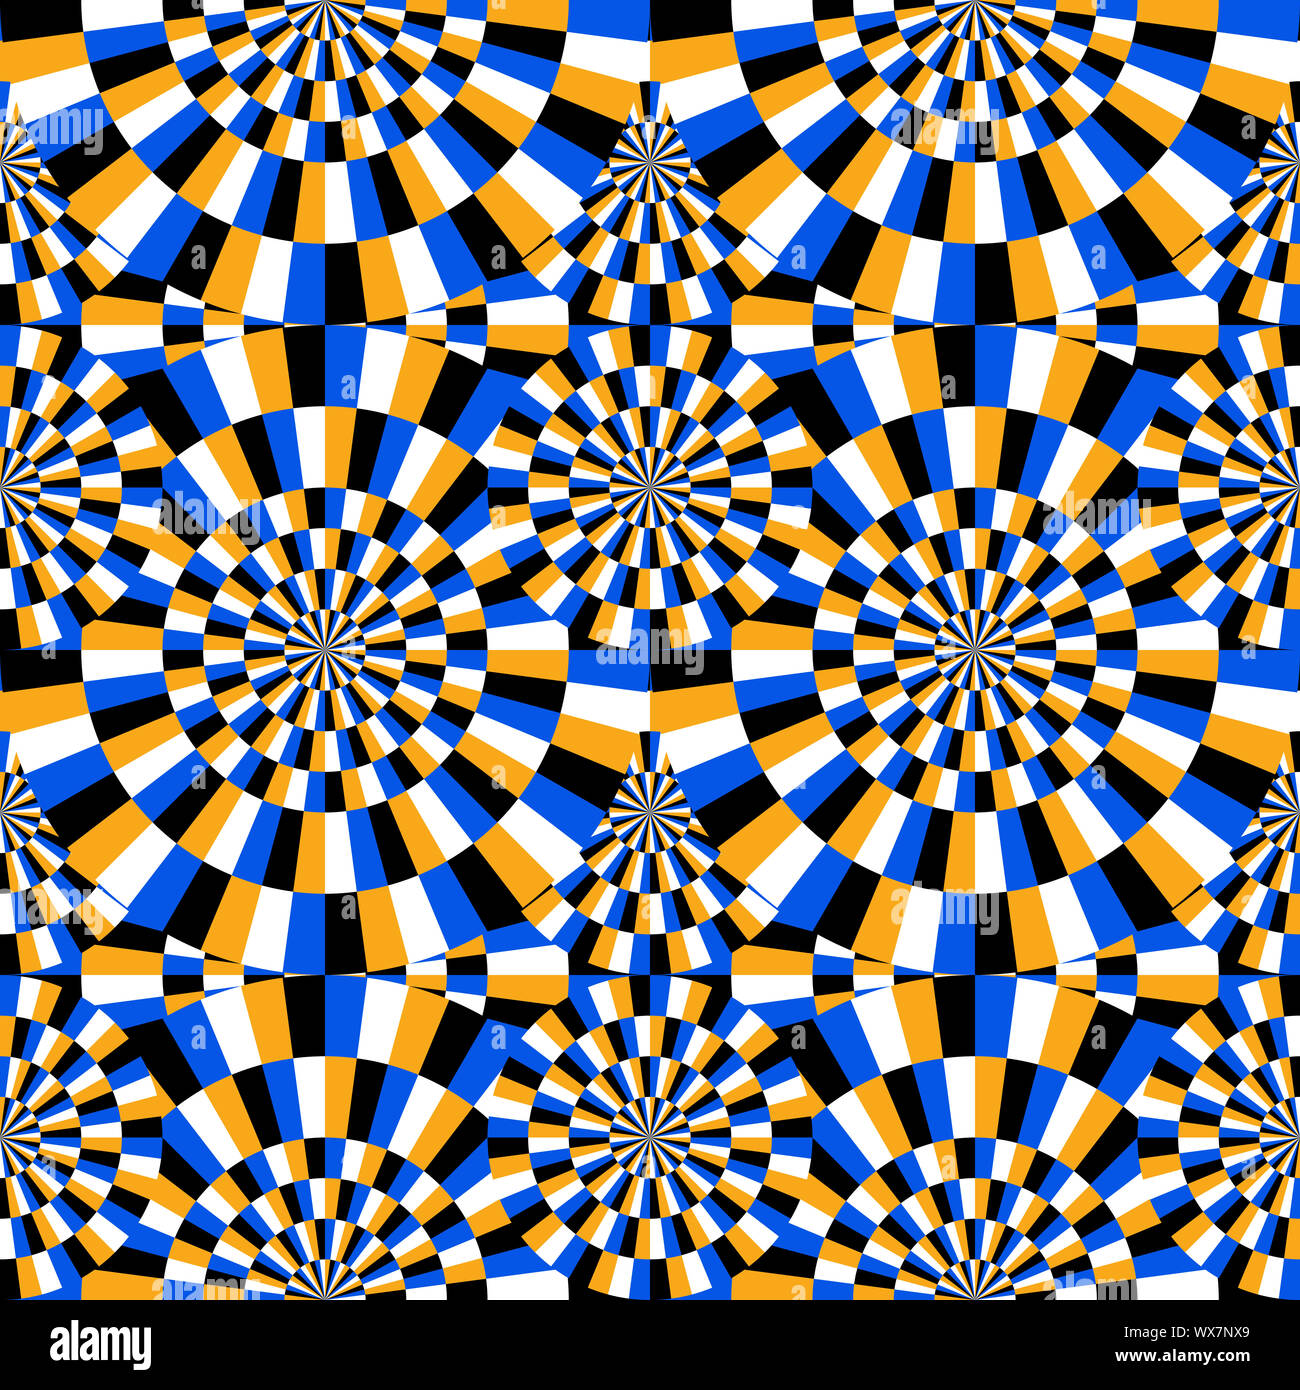 optical Illusion moving circles Stock Photo